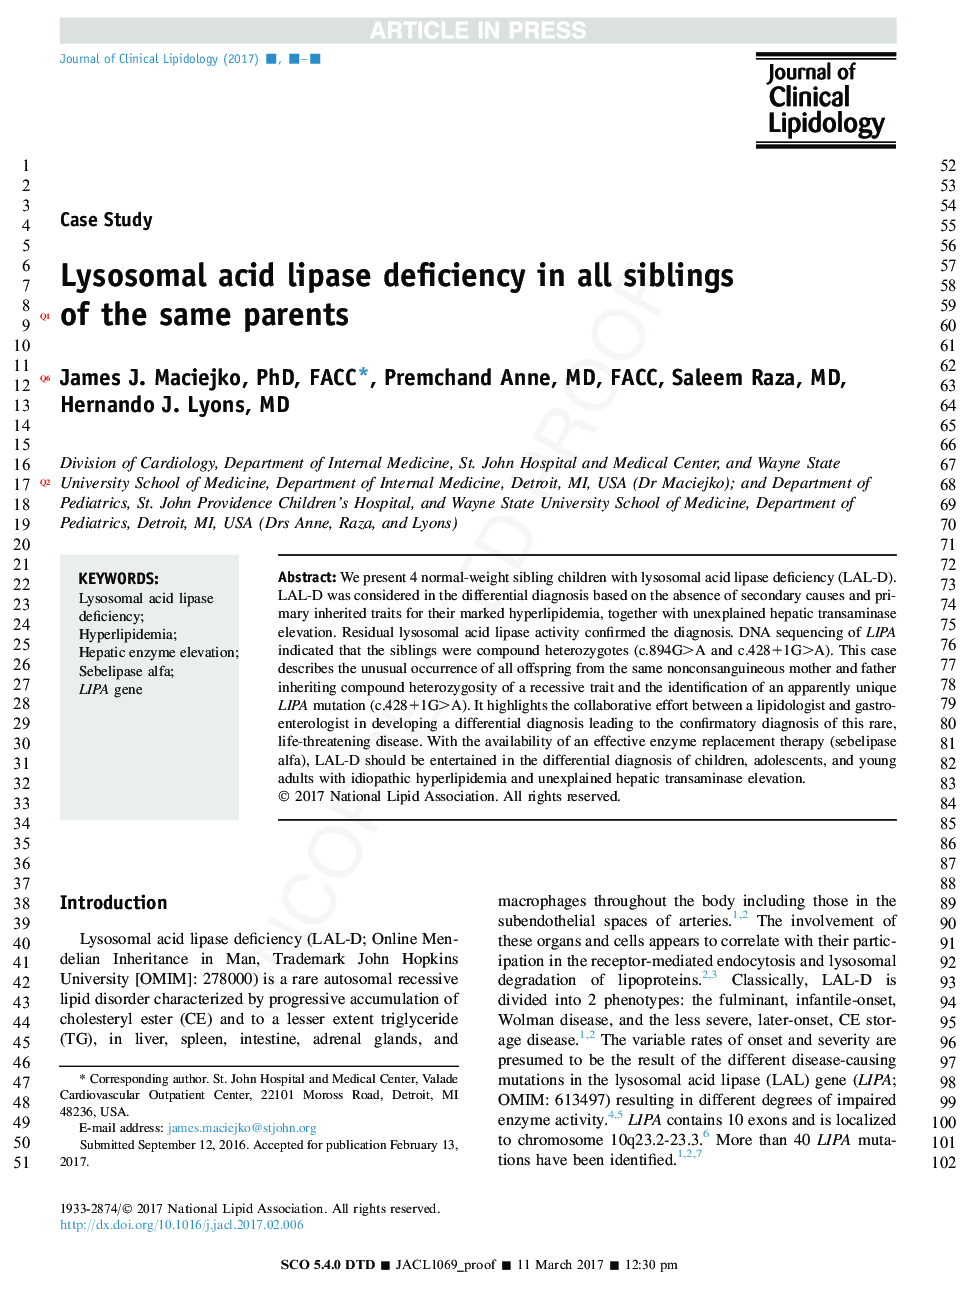 Lysosomal acid lipase deficiency in all siblings of the same parents